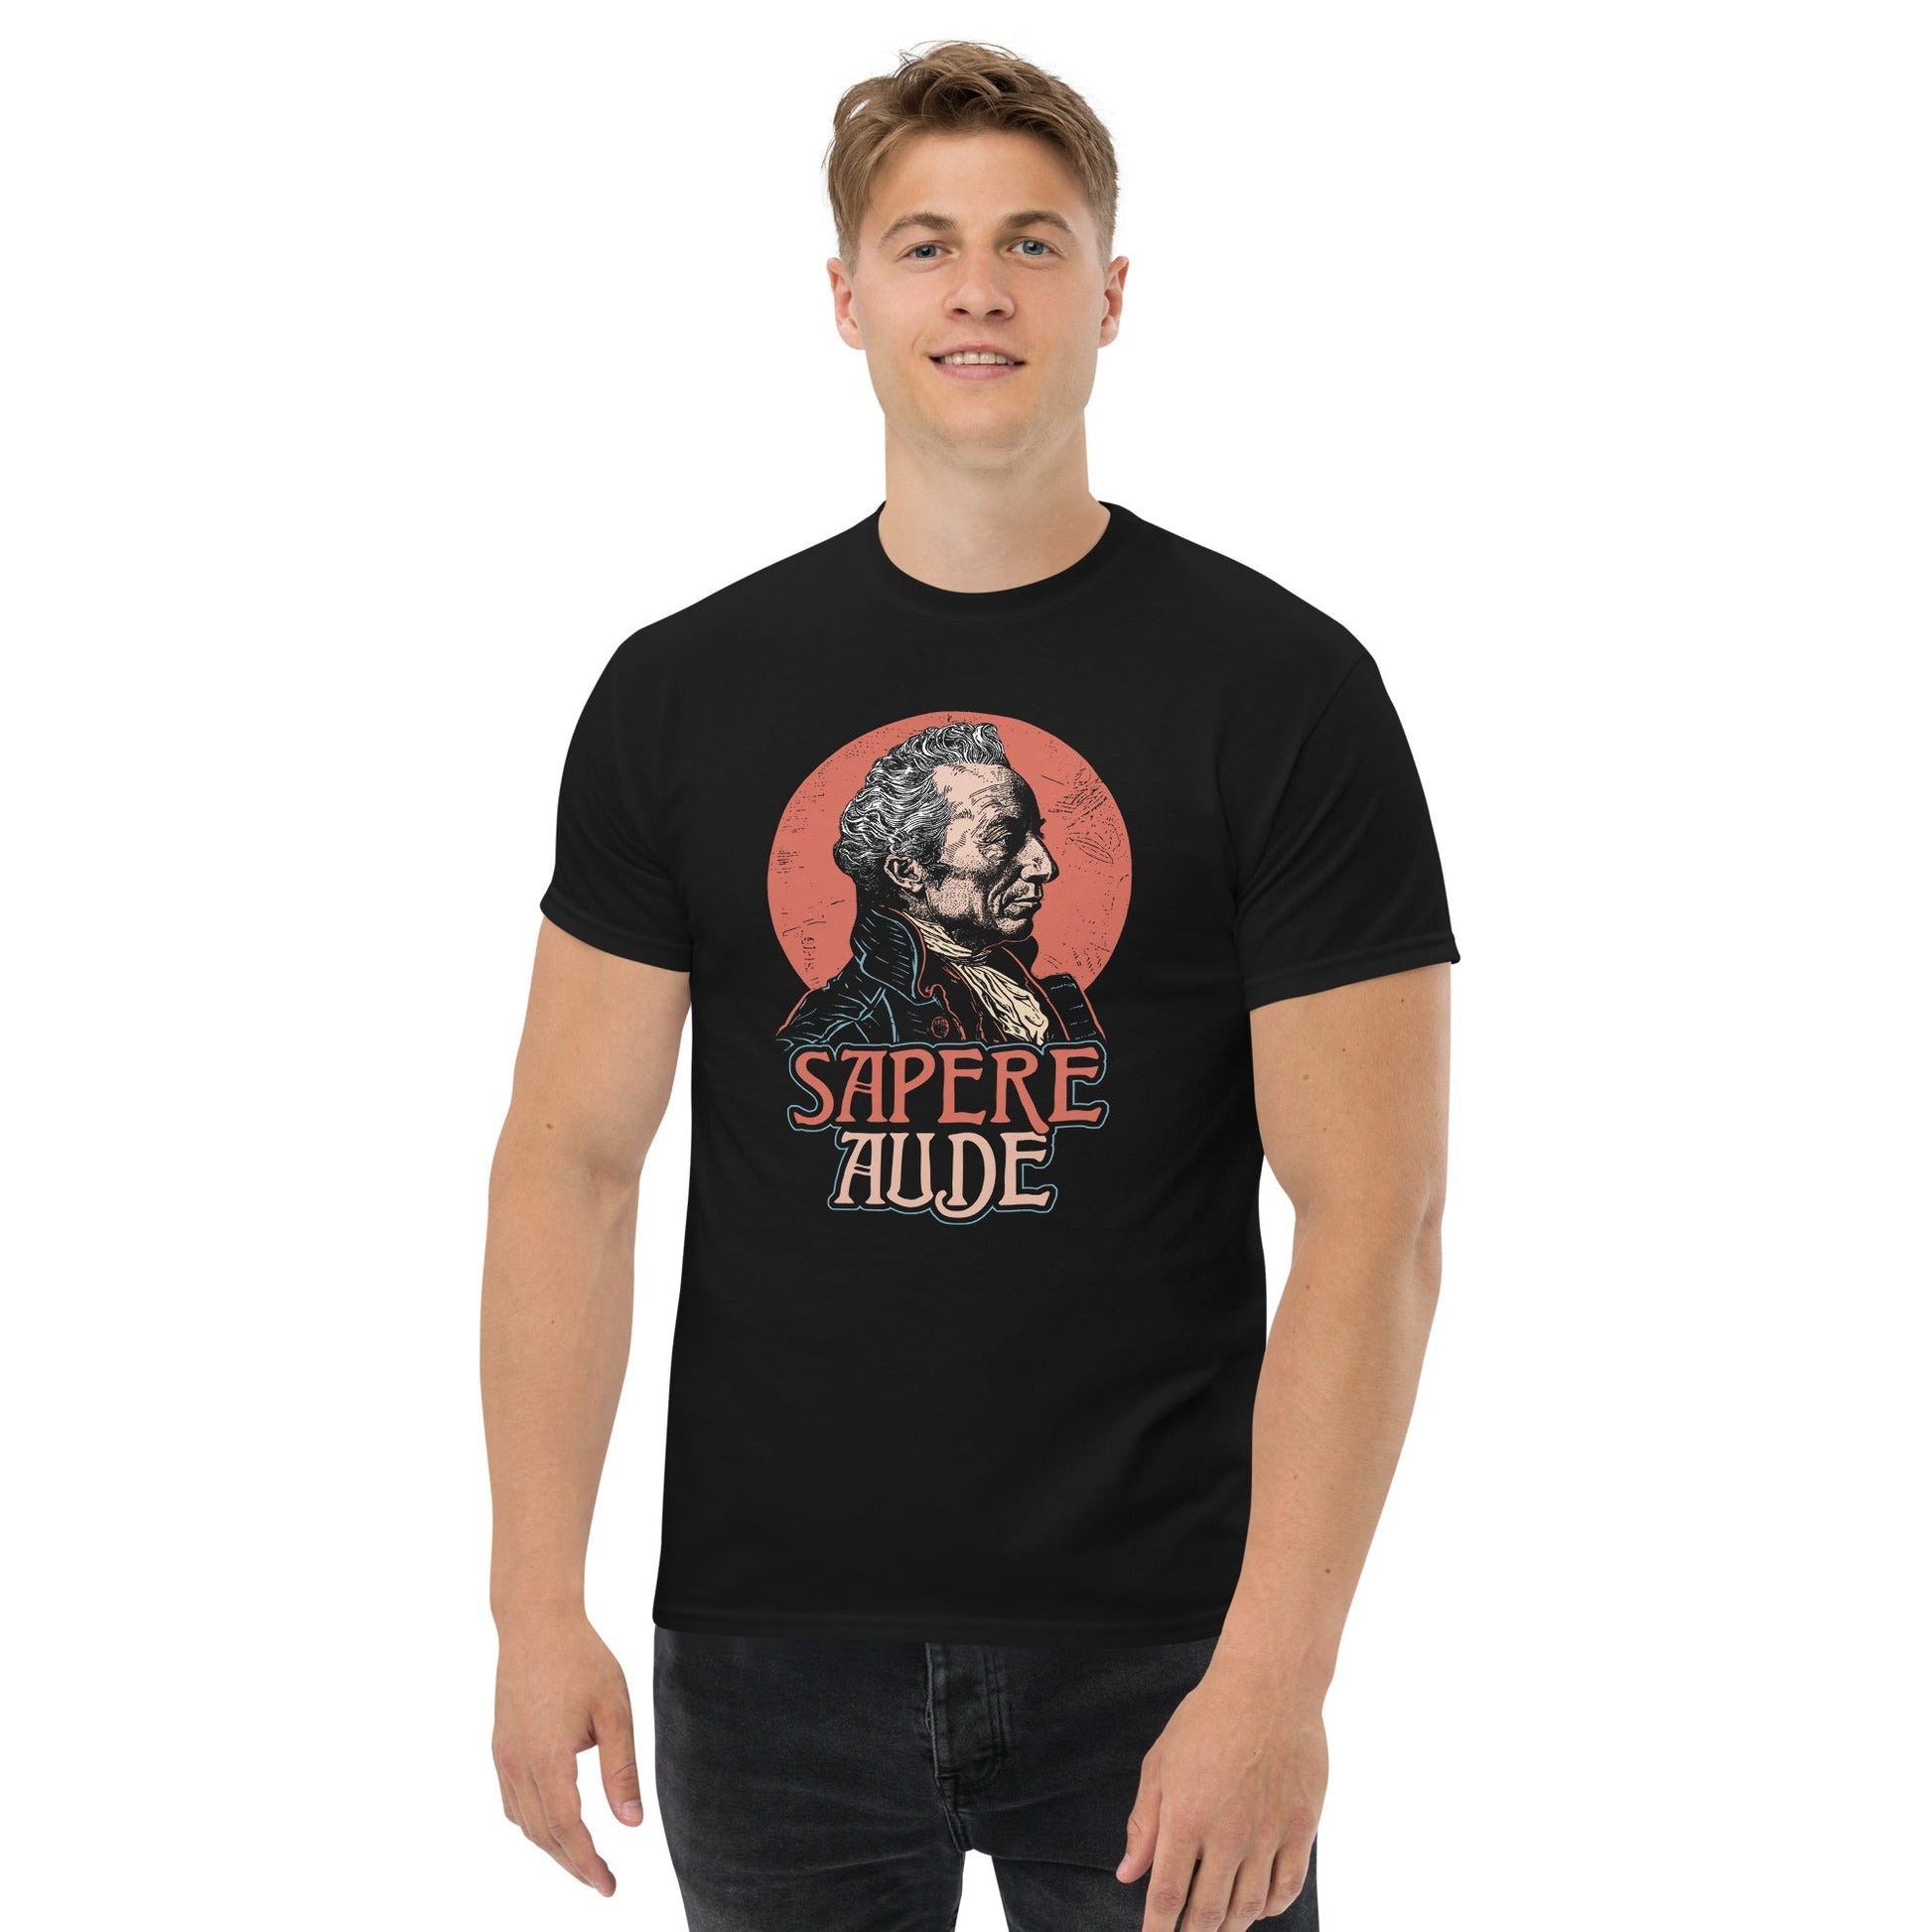 Immanuel Kant - Sapere Aude - Plus-Sized T-Shirt